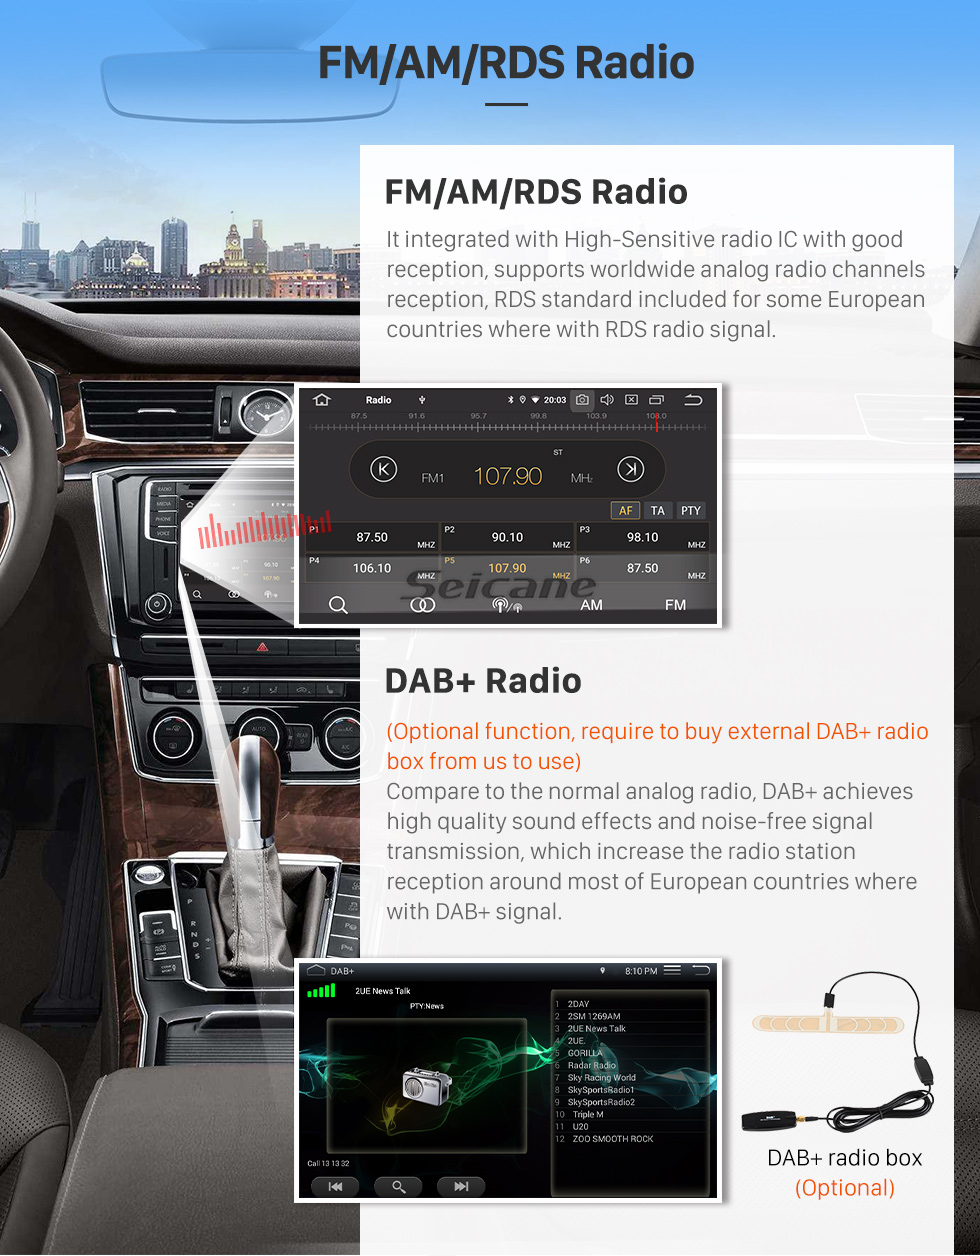 Seicane Carplay 9 pouces HD Écran tactile Android 12.0 pour 2013 2014-2016 BUCK ENCORE OPEL MOKKA Navigation GPS Android Auto Head Unit Support DAB + OBDII WiFi Commande au volant